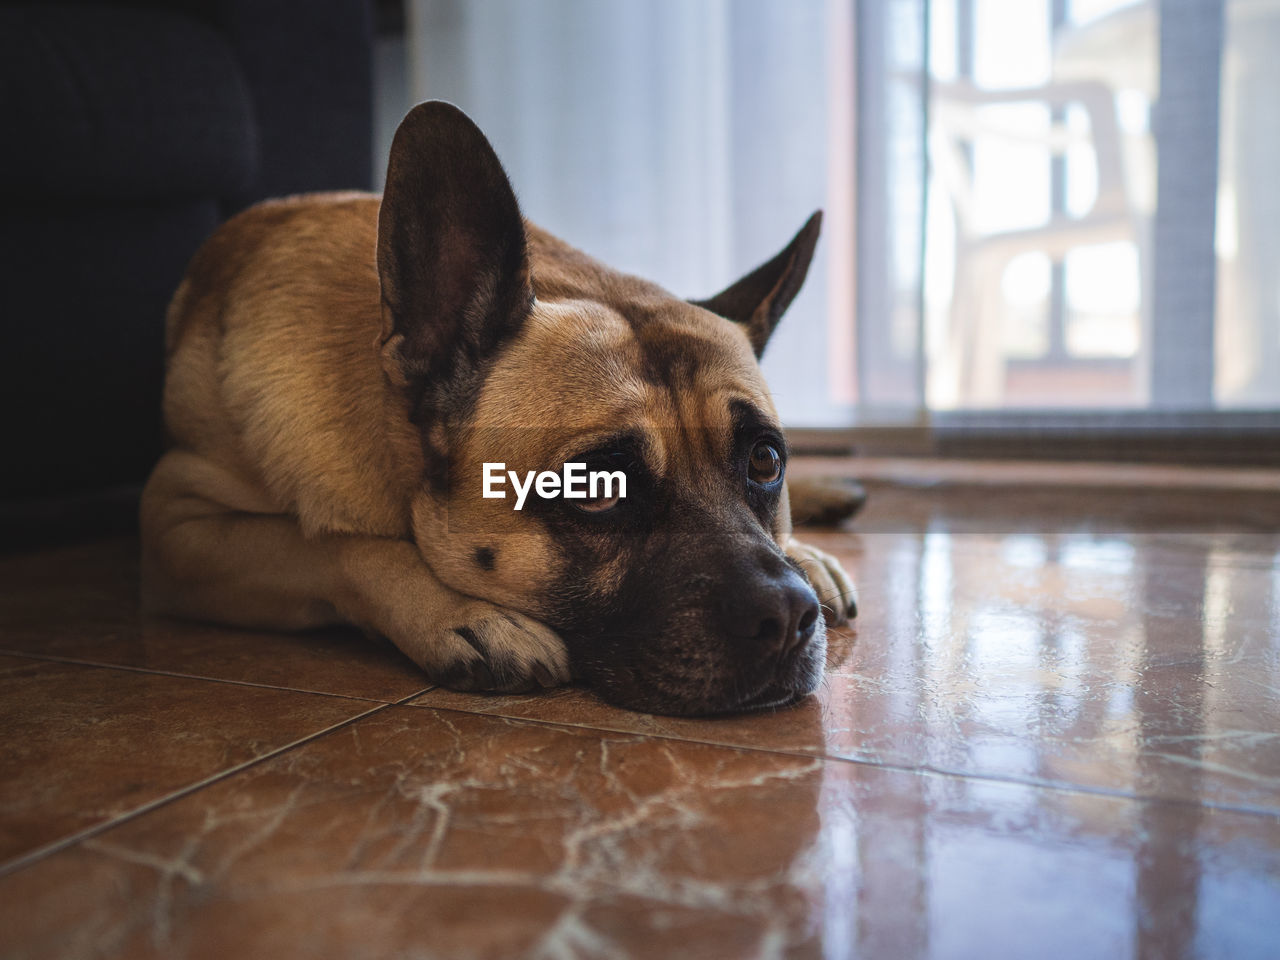 Close-up portrait of a dog resting on tiled floor